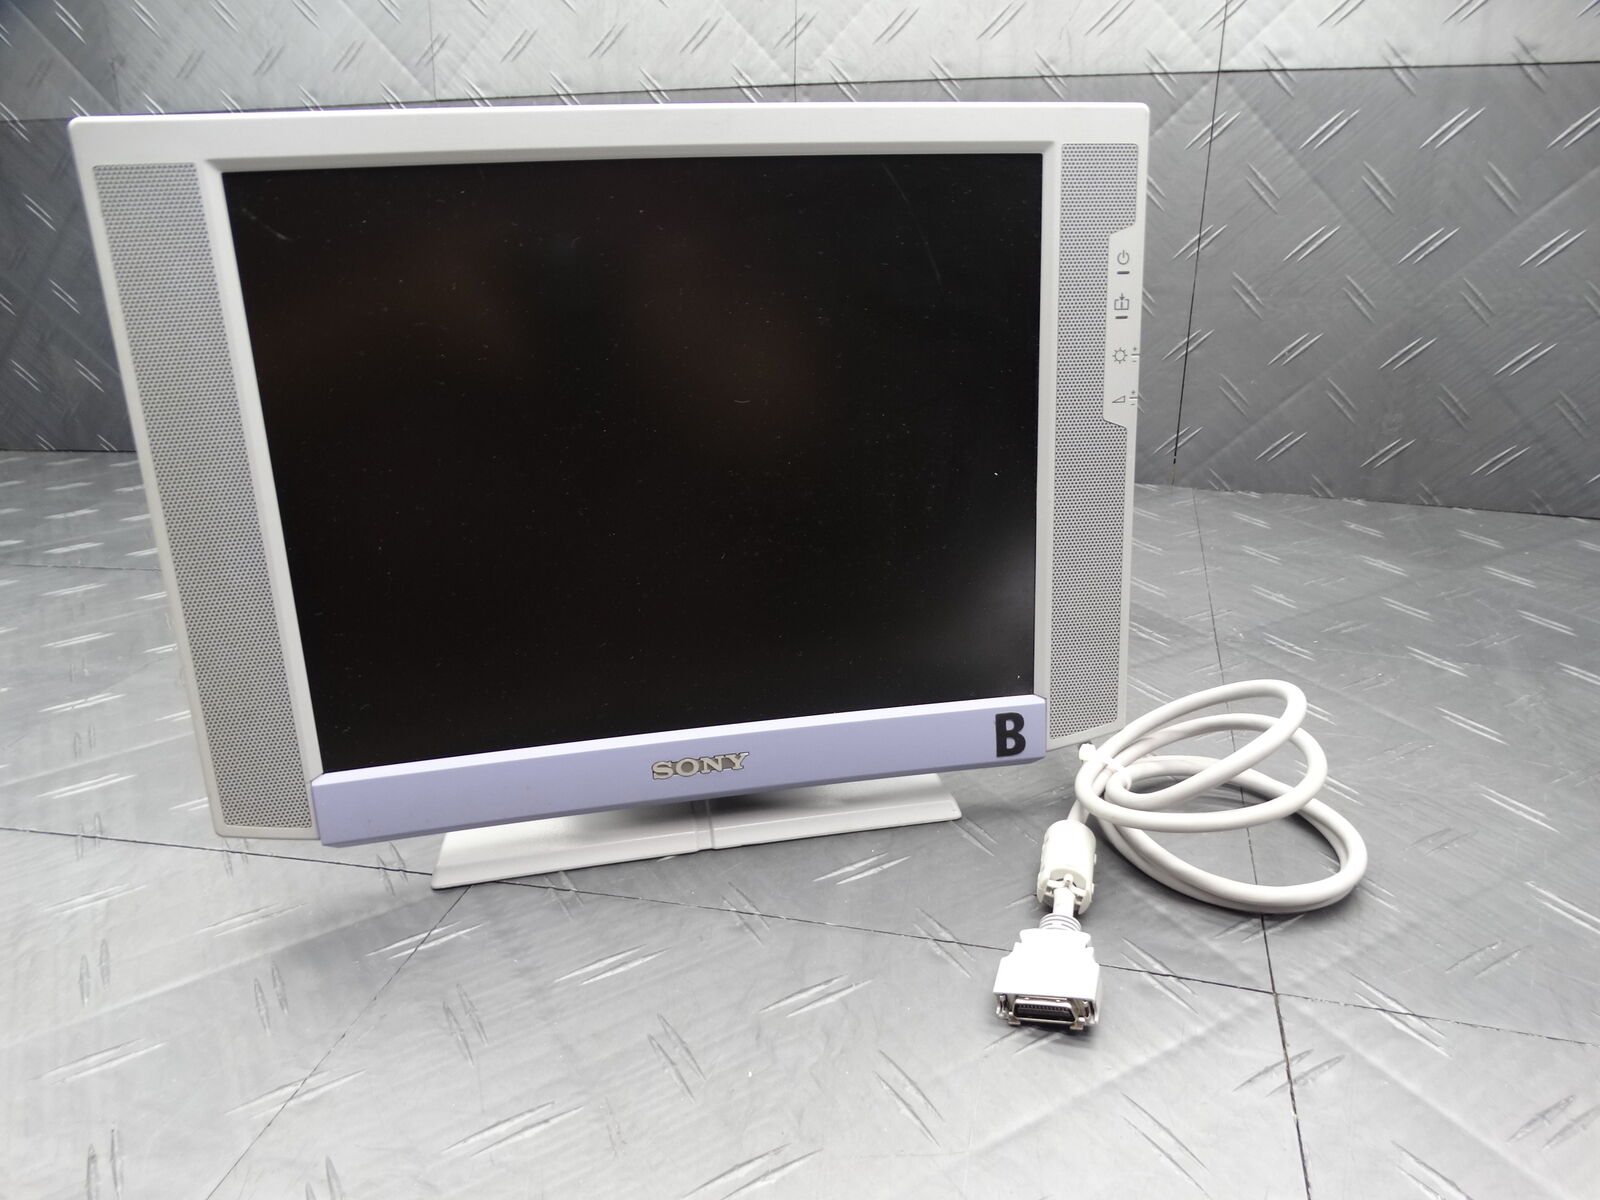 Sony Vaio PCVA-141LAP LCD Monitor for Sony VAIO Made in Japan RARE